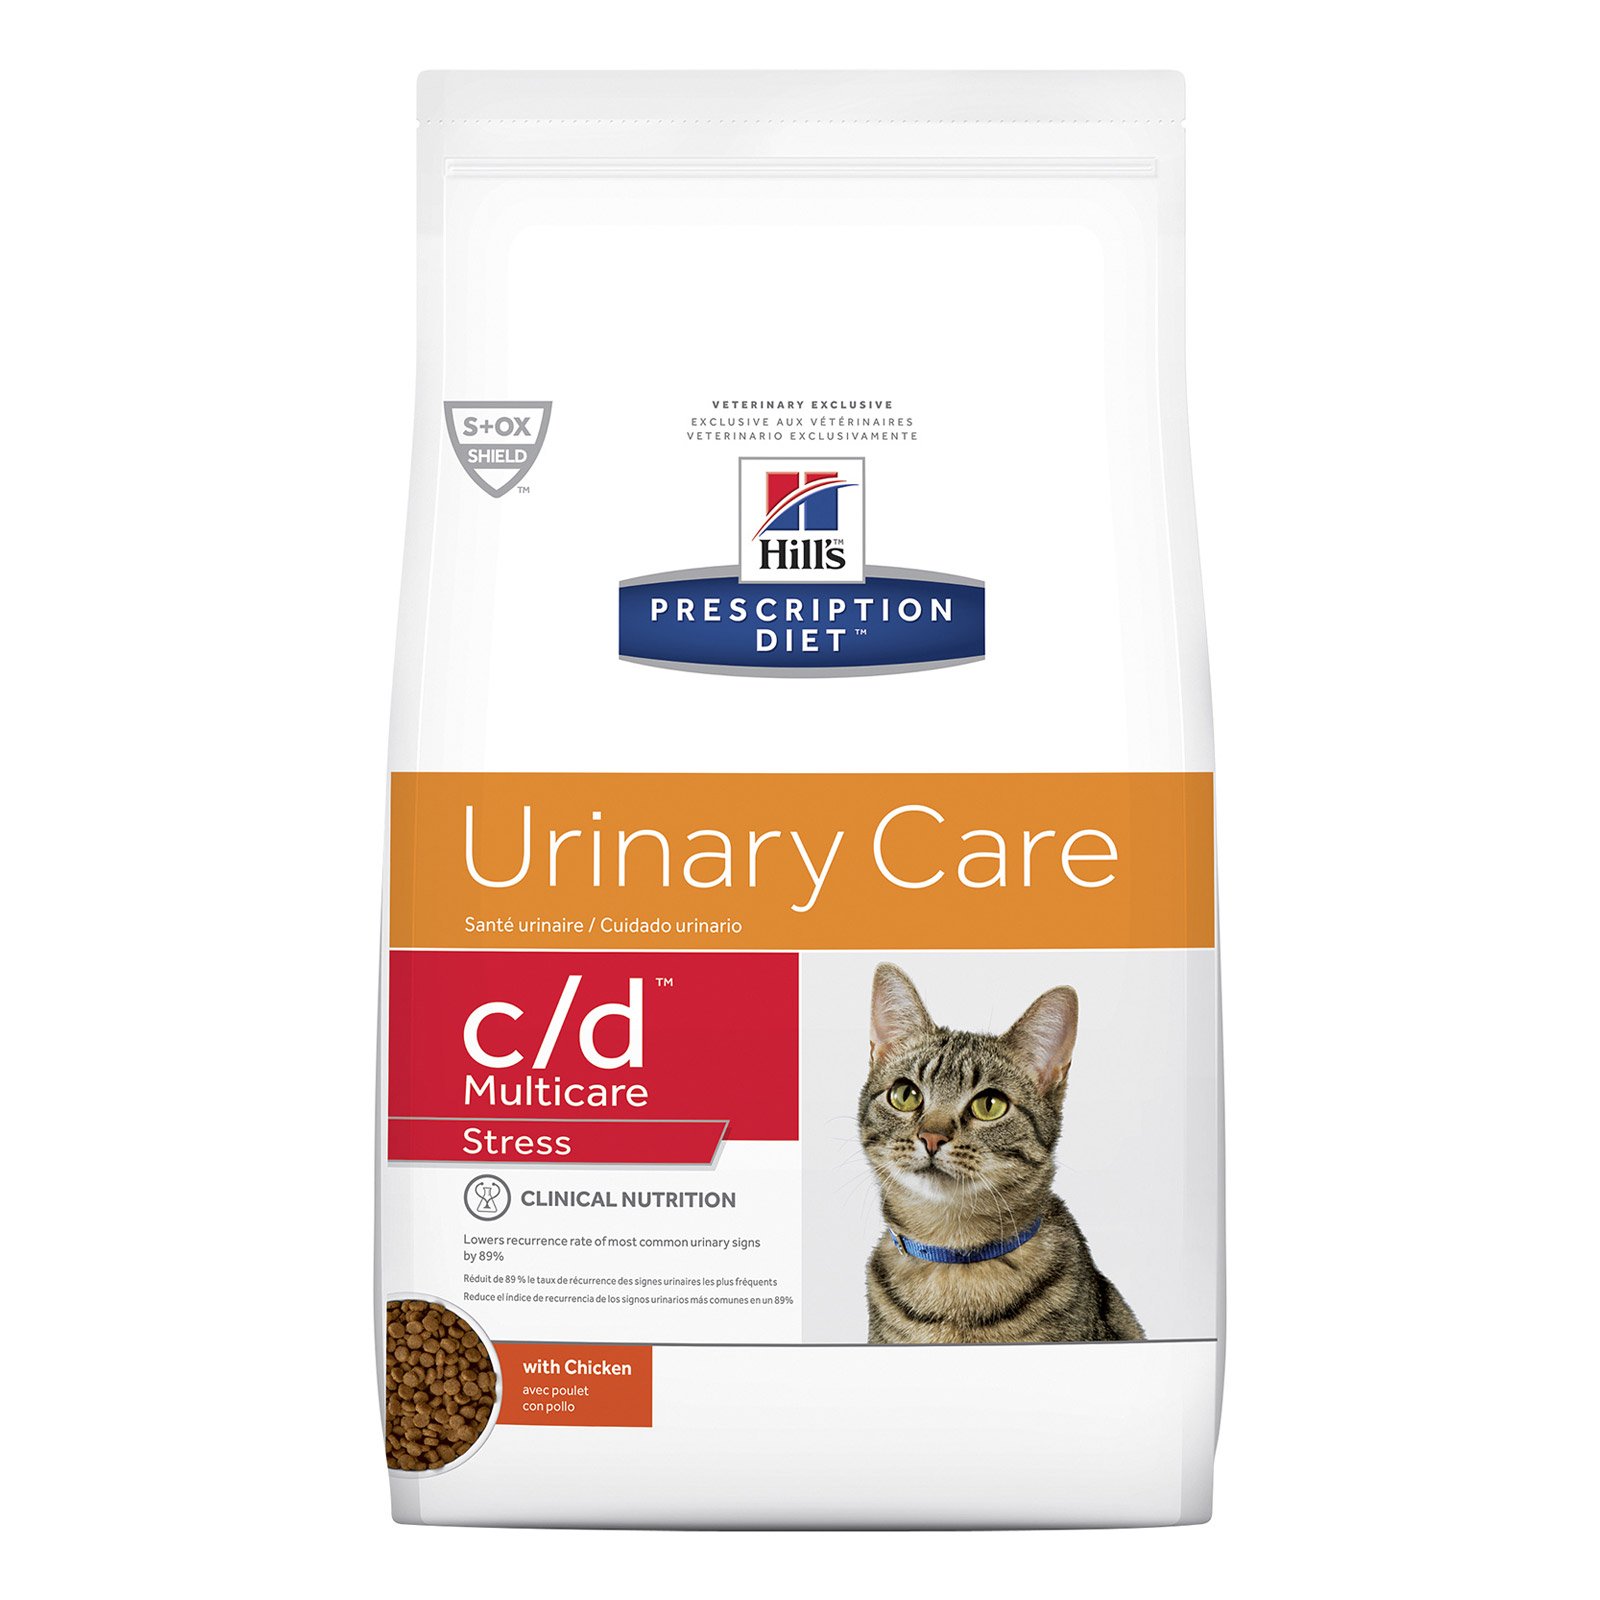 Hill's Prescription Diet c/d Multicare Stress Urinary Care Dry Cat Food  